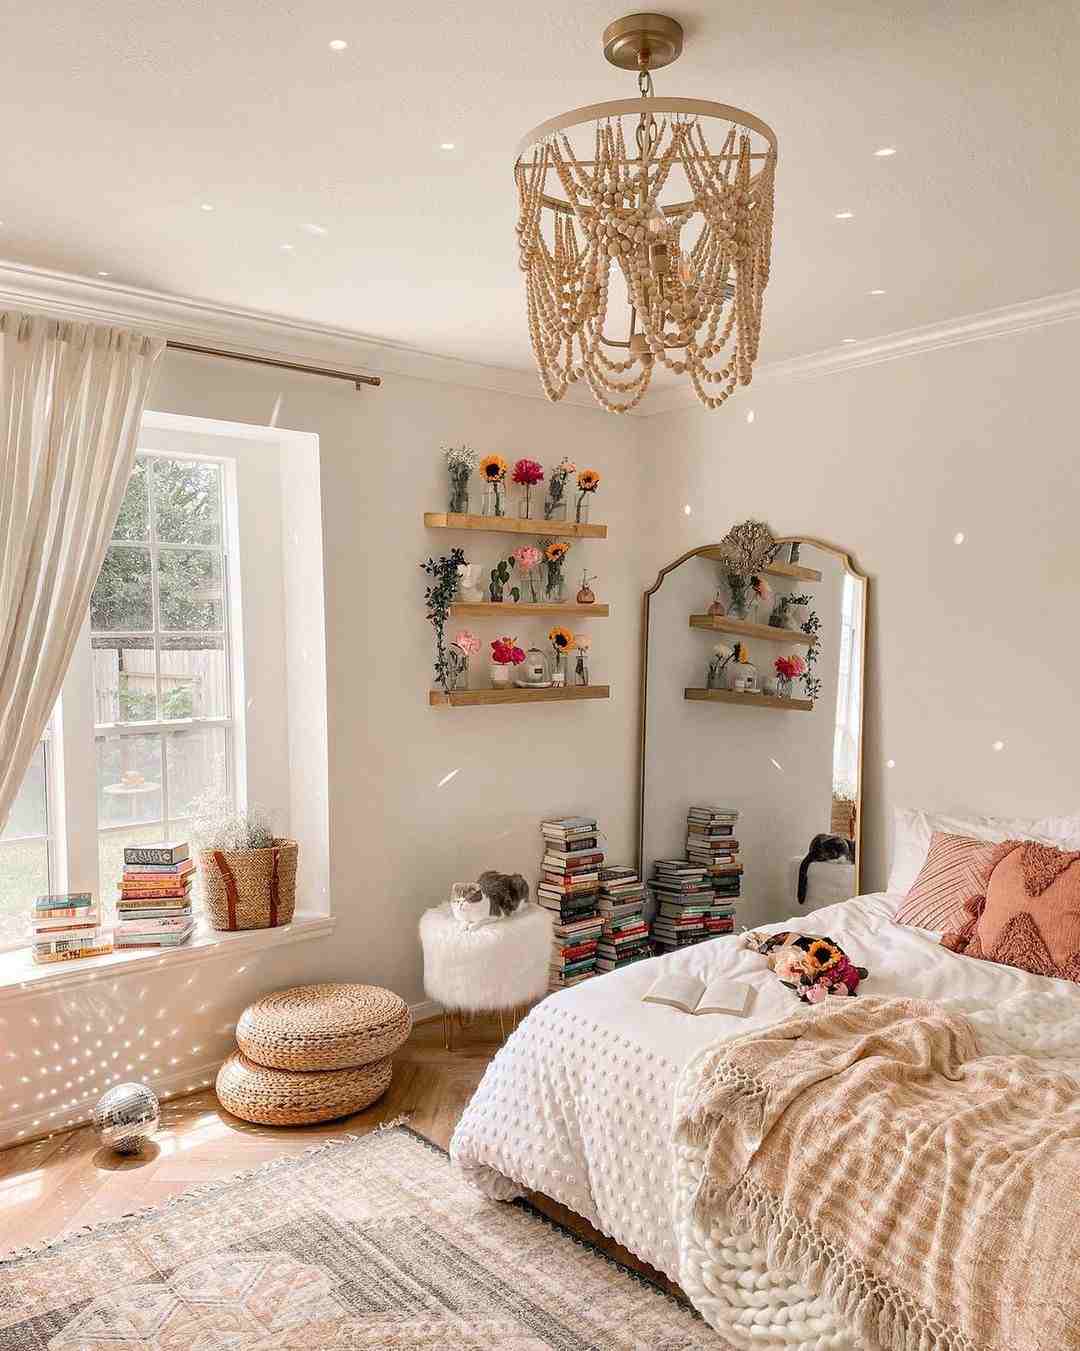 mirrored bedroom ideas